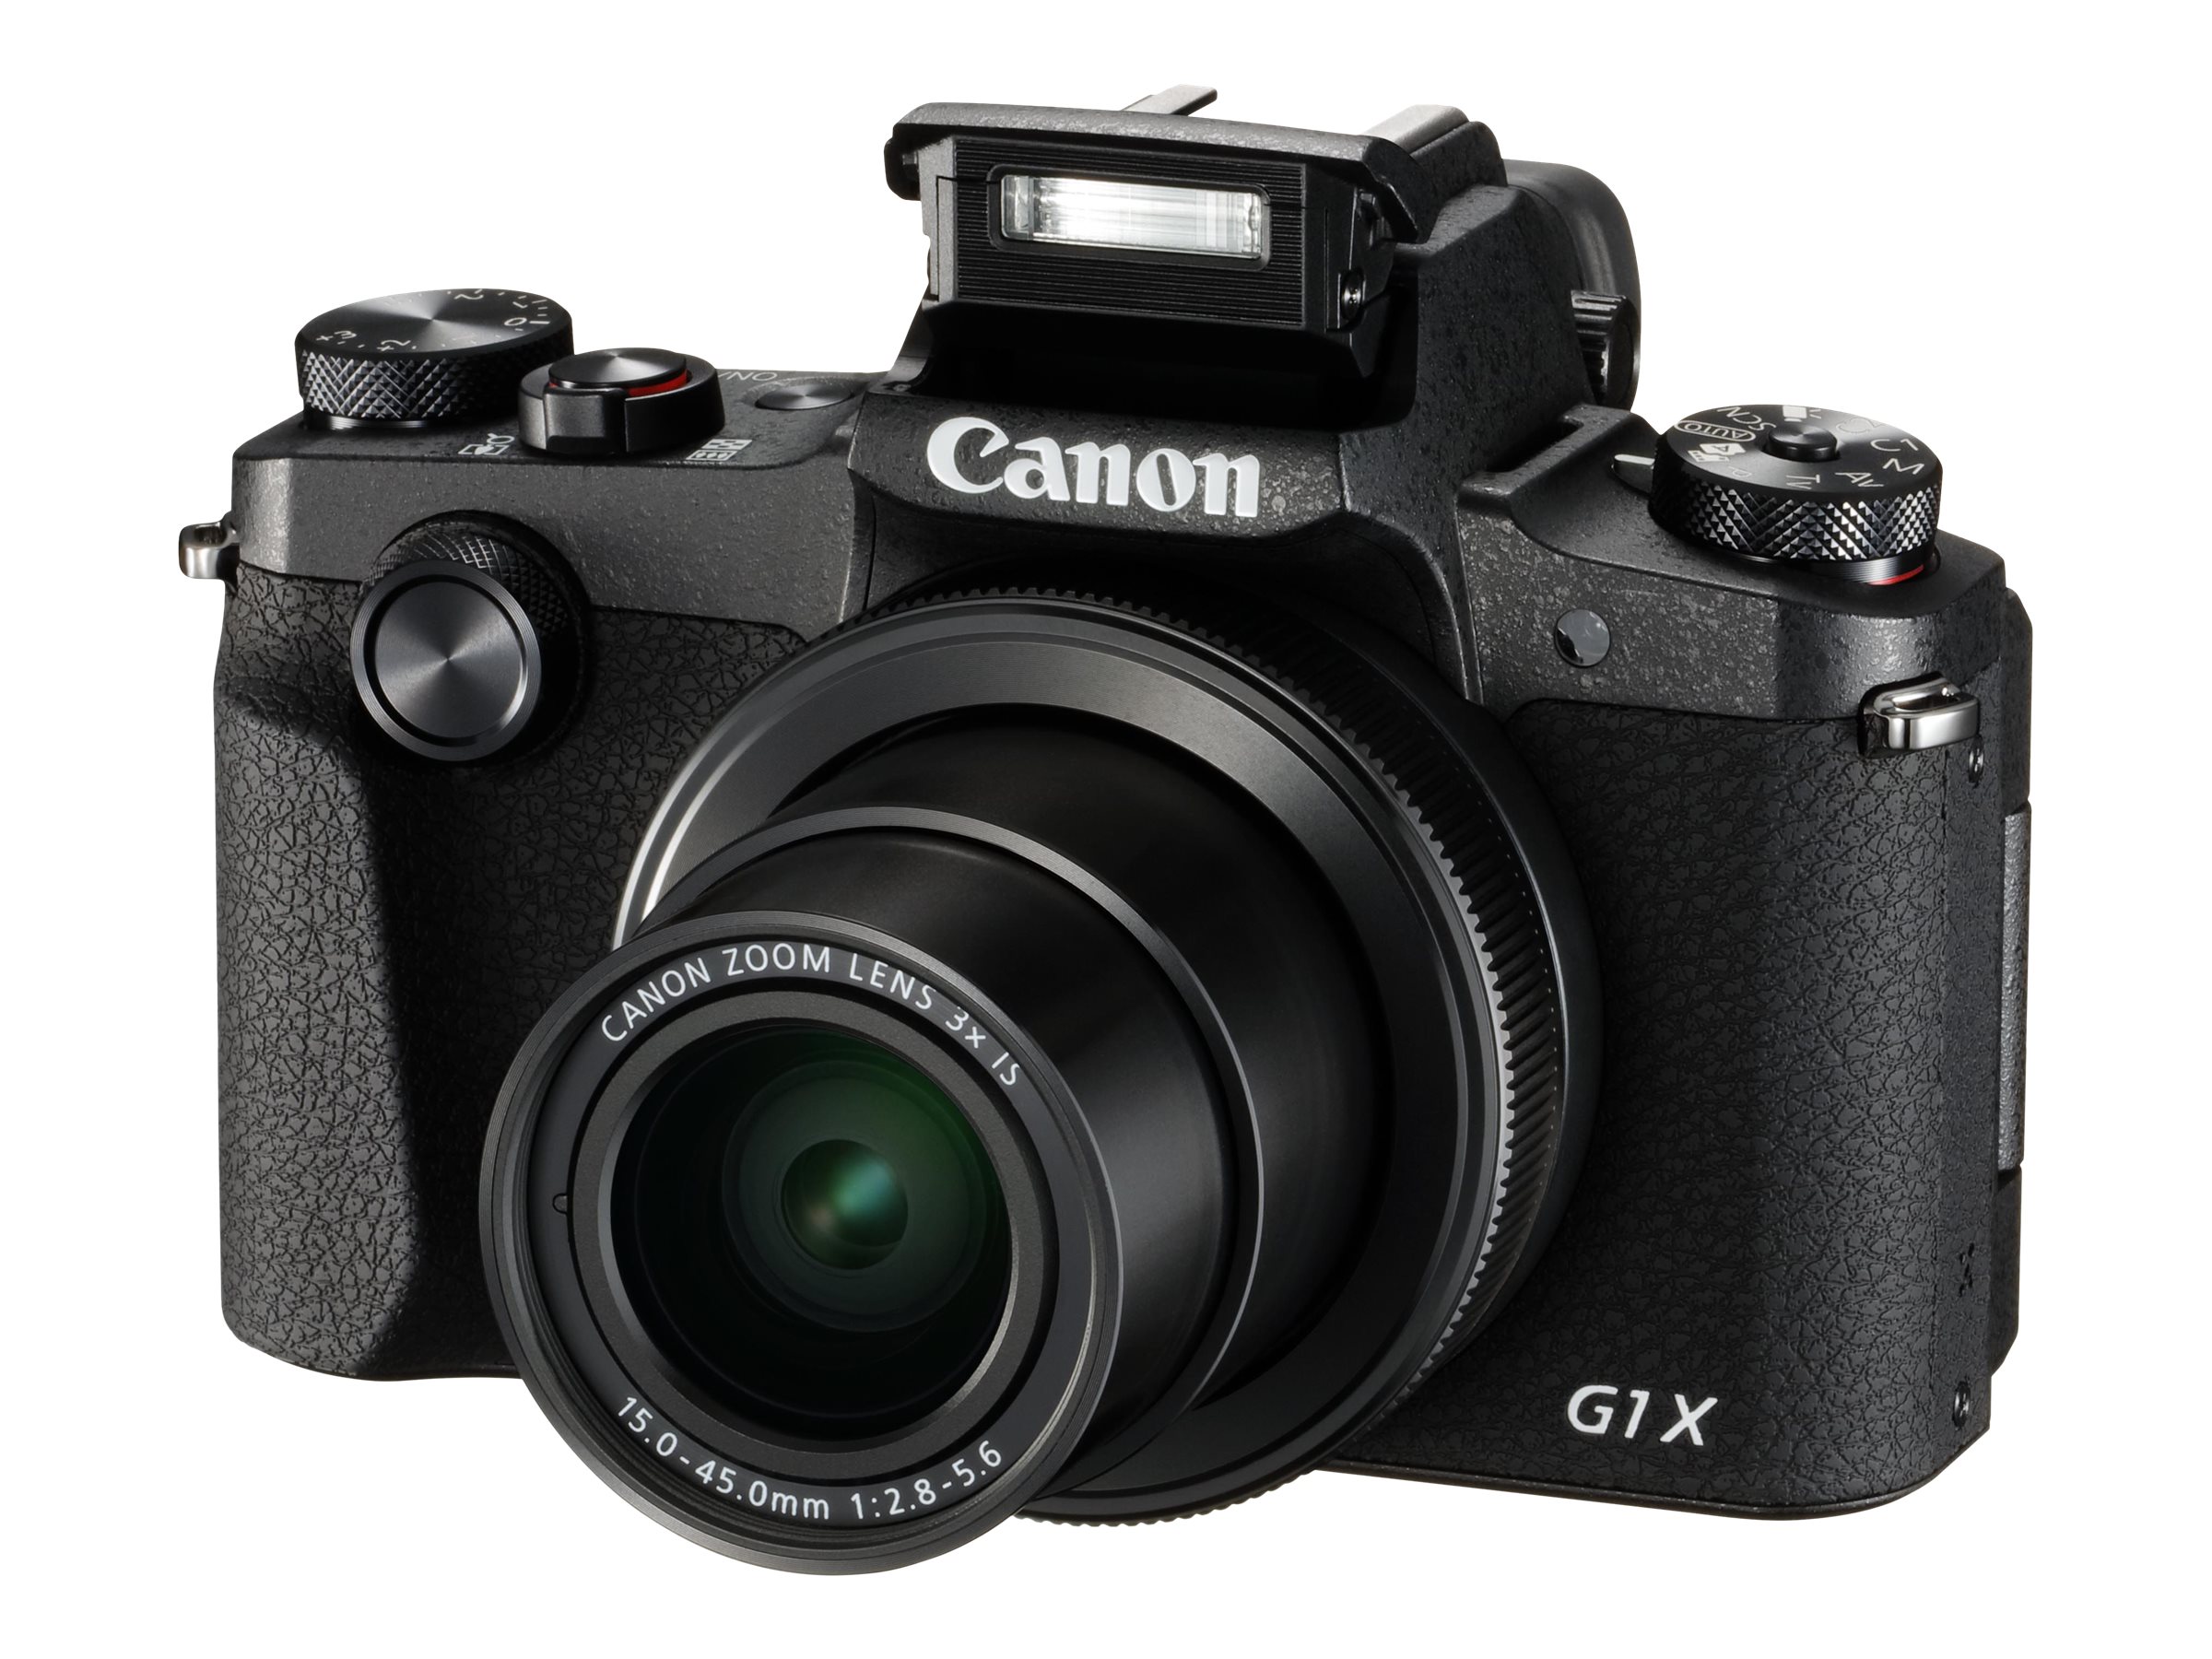 Canon PowerShot G1 X Mark III - Digital camera - compact - 24.2 MP - APS-C - 1080p / 60 fps - 3x optical zoom - Wireless LAN, NFC, Bluetooth - image 1 of 7